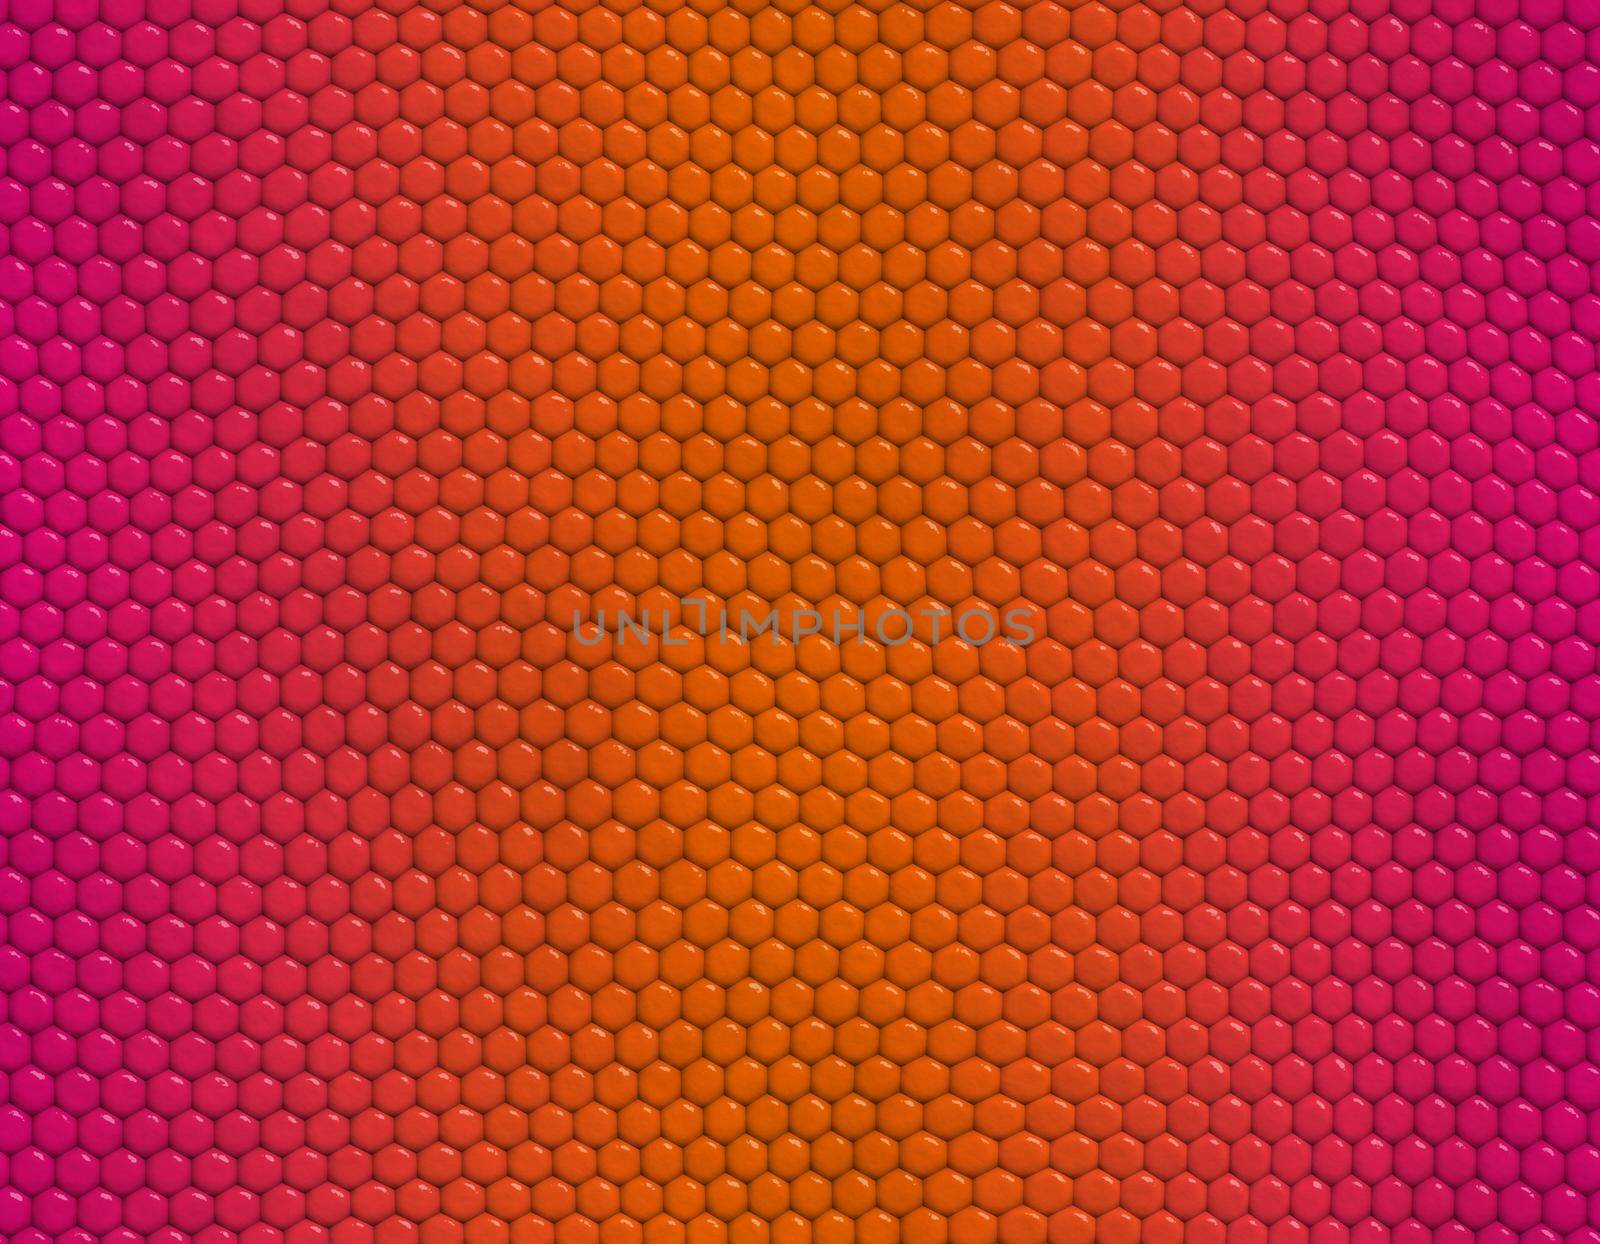 Magenta and orange gradient snake skin pattern, hexagonal scale by Bezdnatm